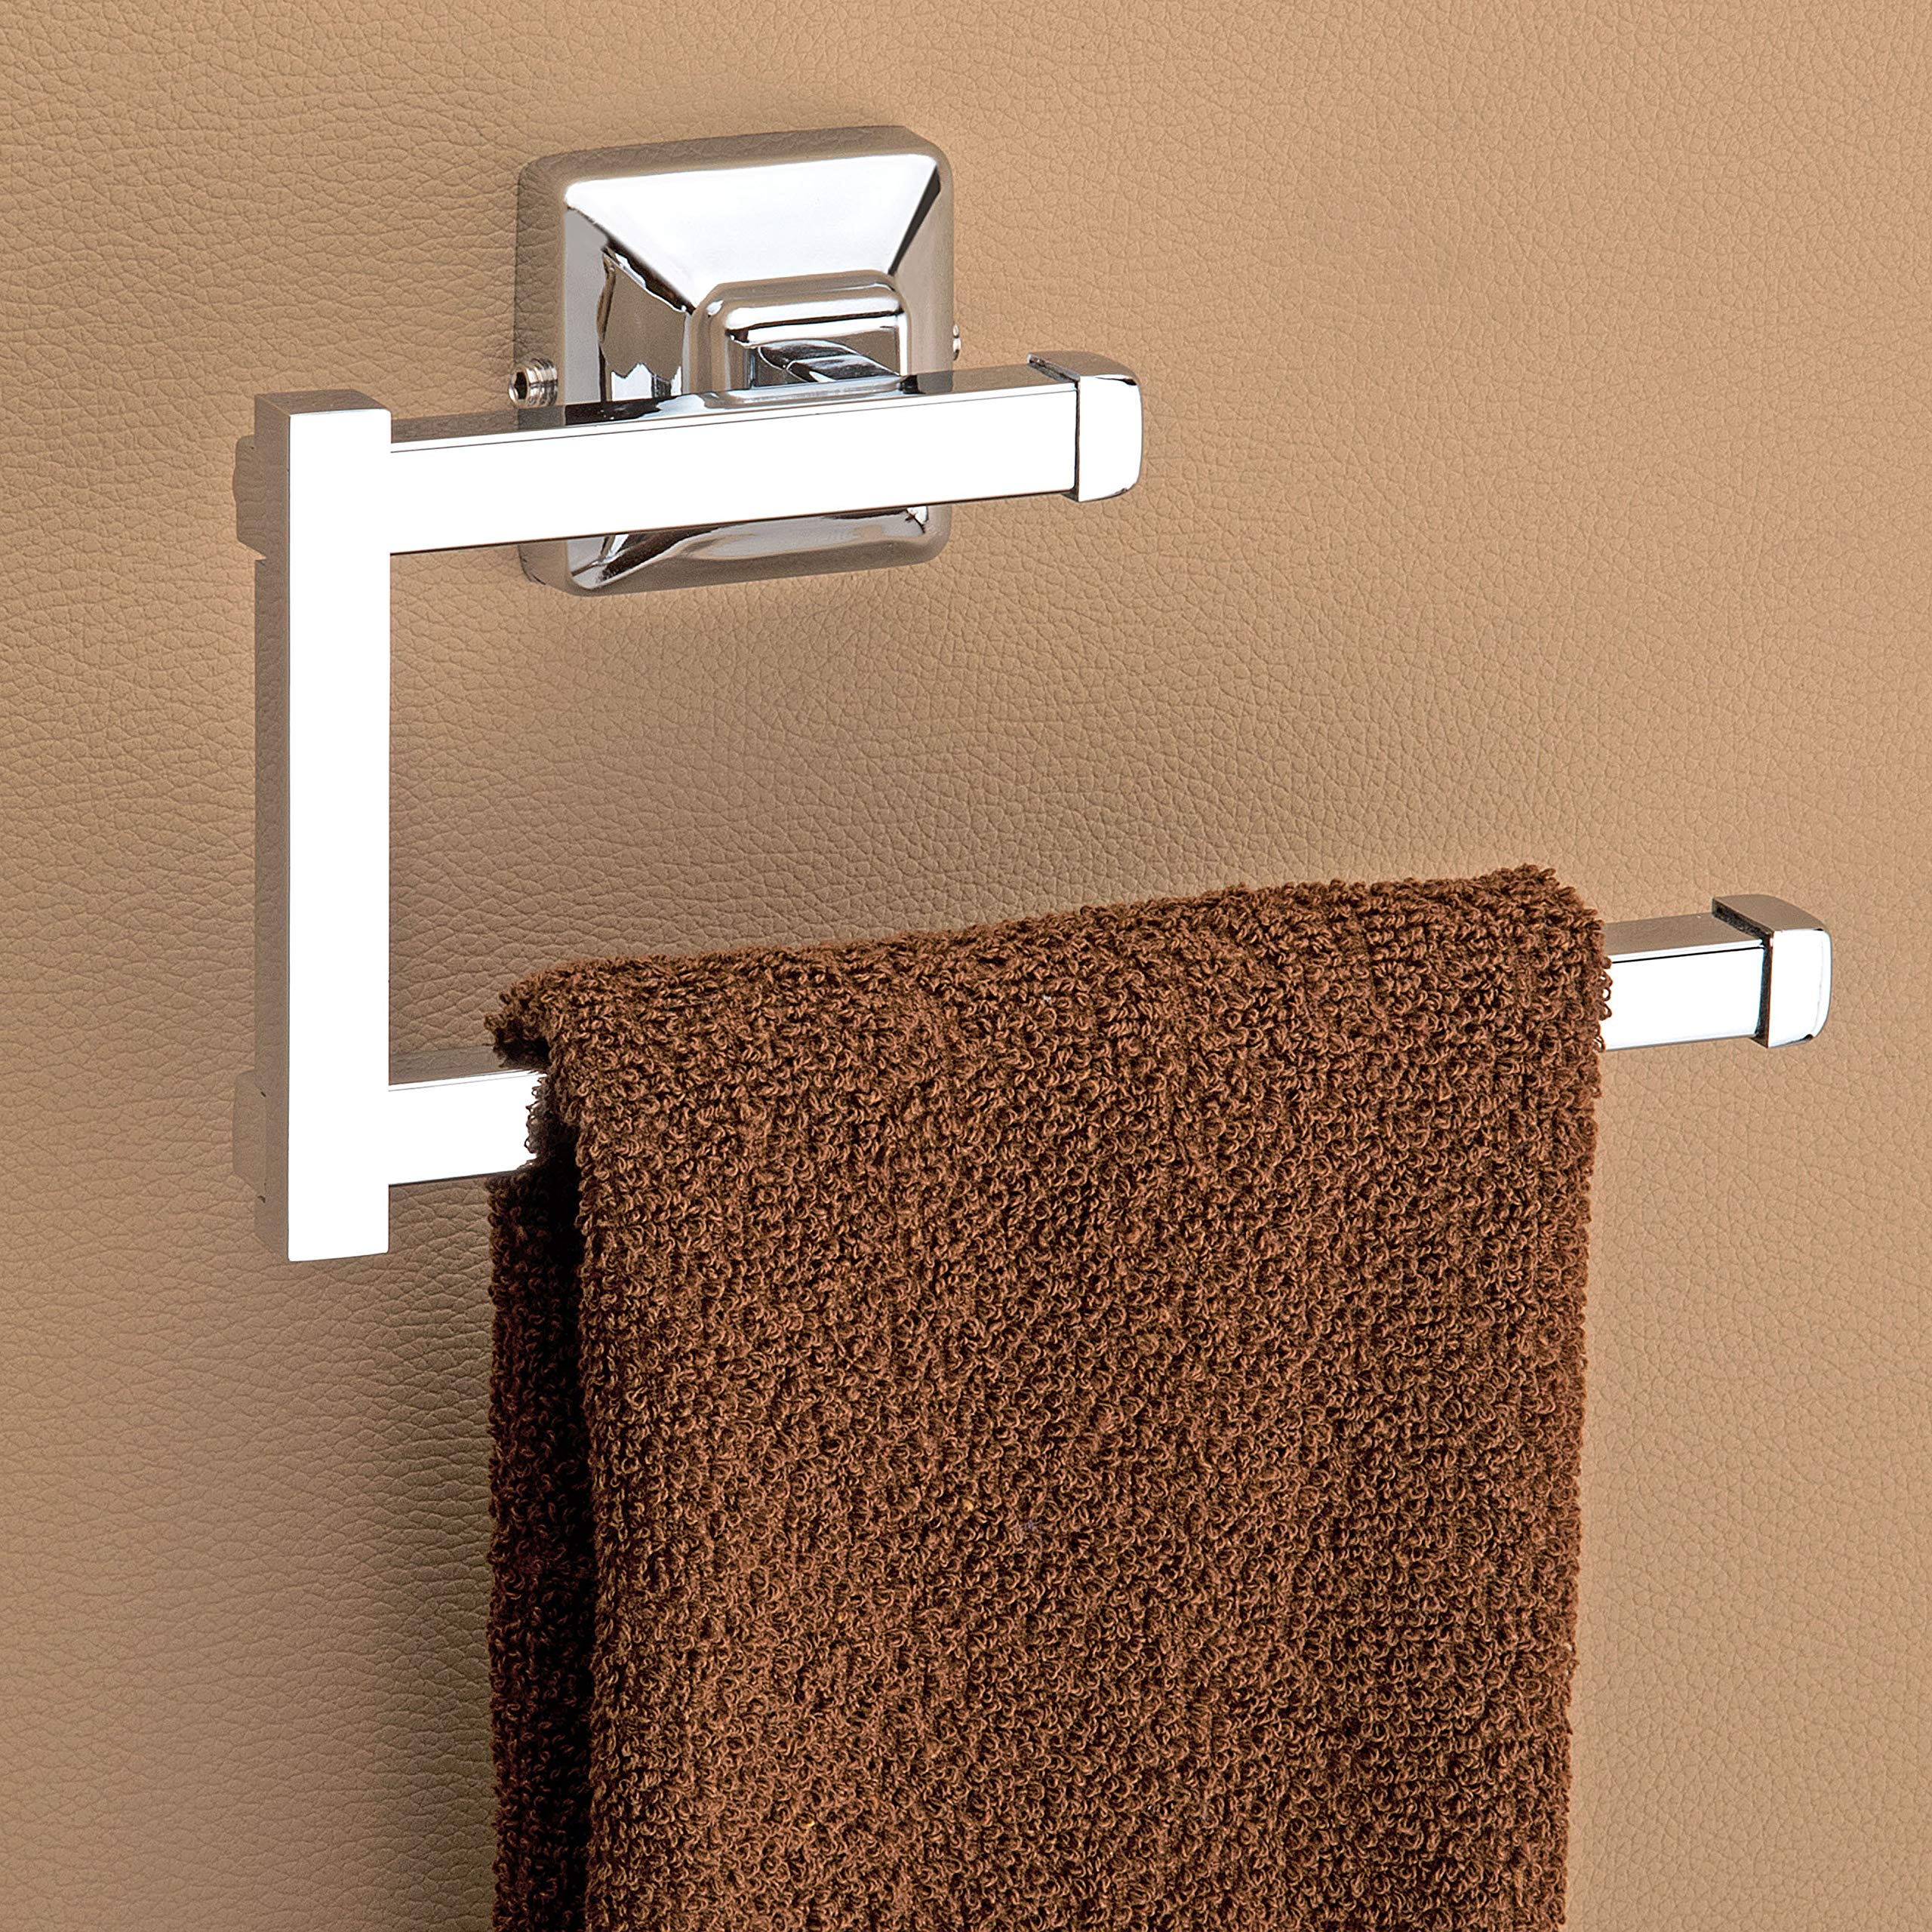 Plantex Stainless Steel 304 Grade Towel Rack with Stainless Steel 304 Grade Squaro Bathroom Accessories Set 5pcs (Towel Rod/Napkin Ring/Tumbler Holder/Soap Dish/Robe Hook)